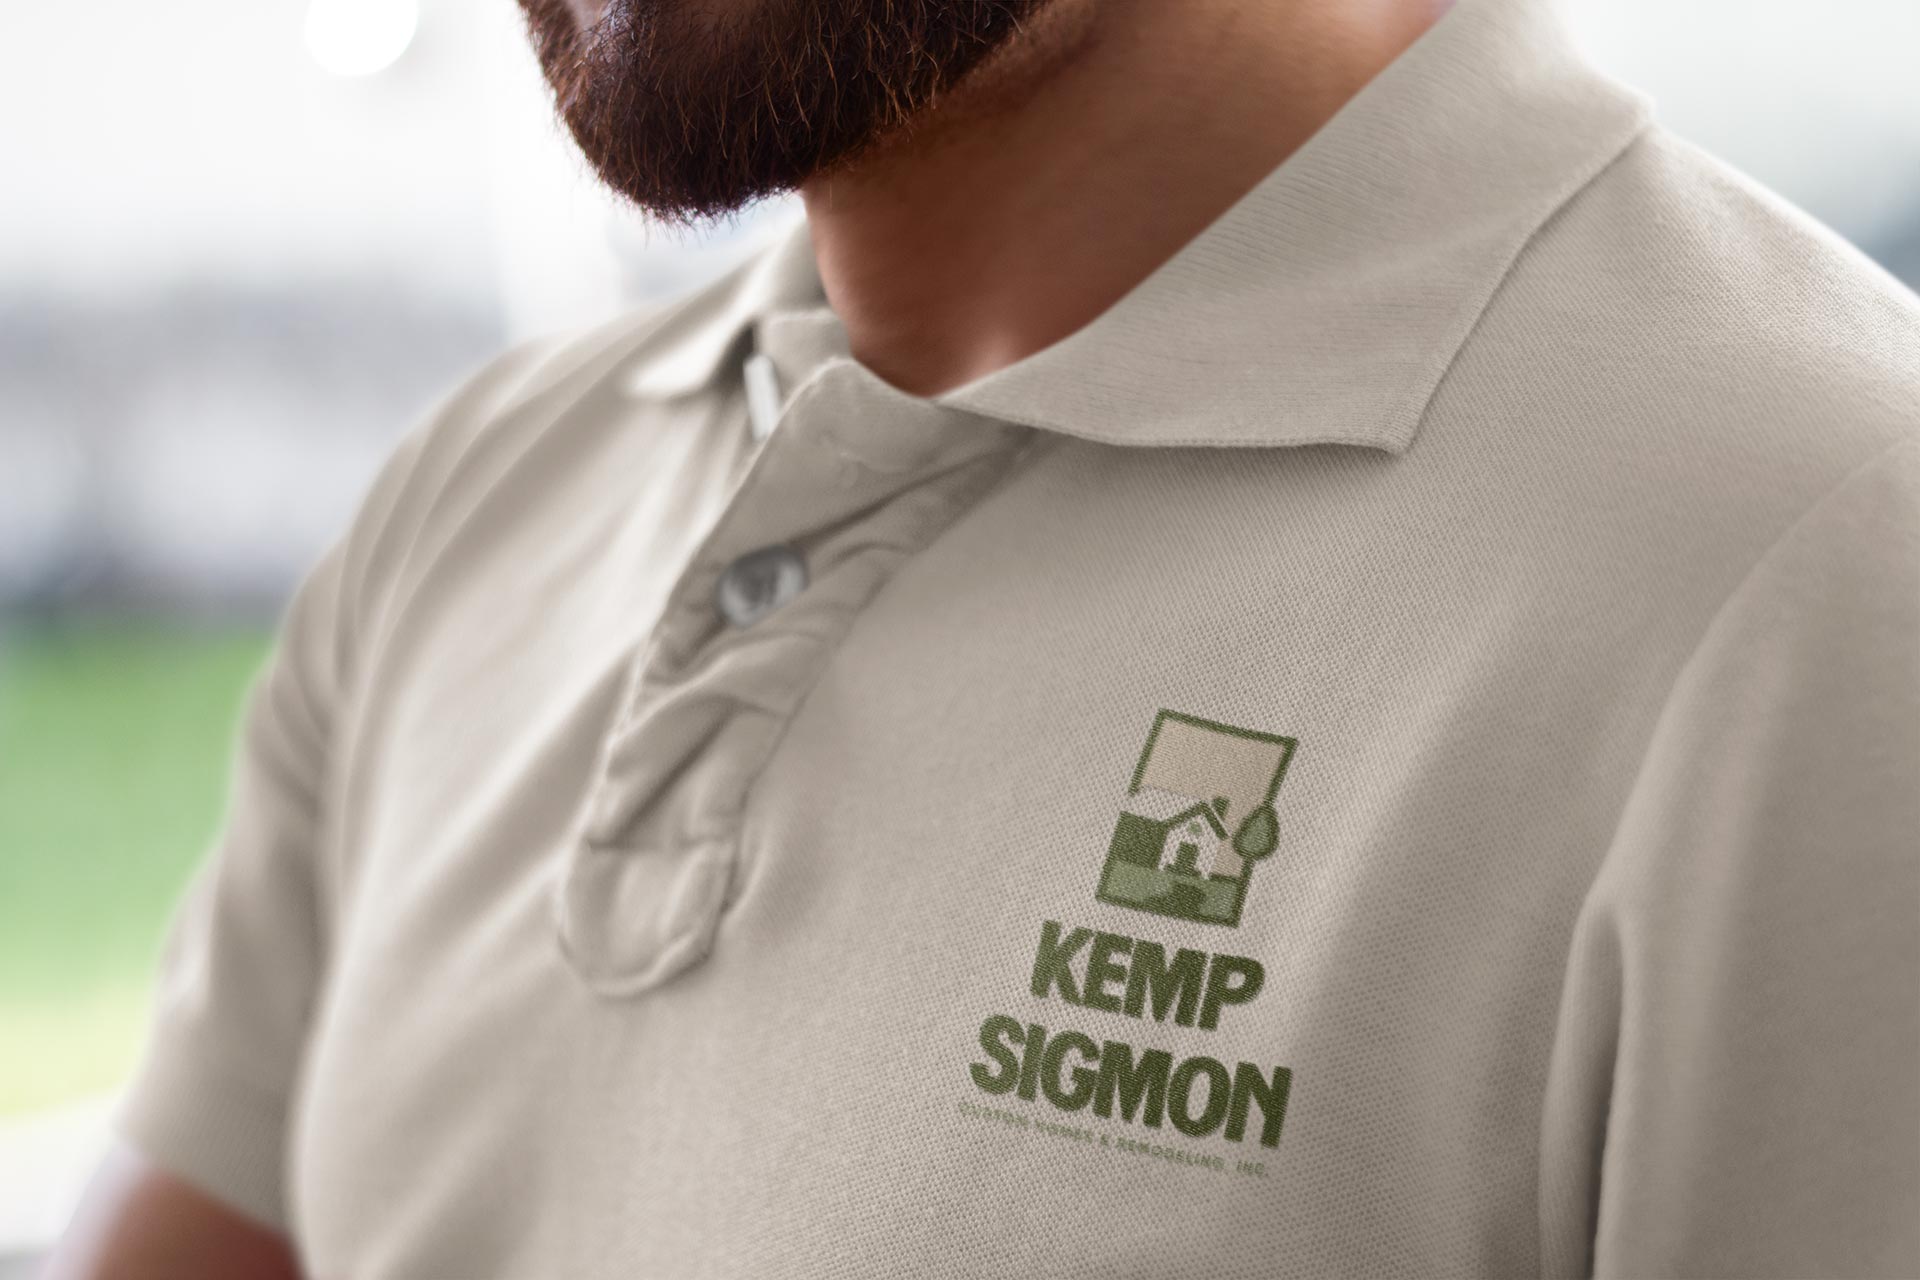 Kemp sigmon Logo Design by Beyond Lines